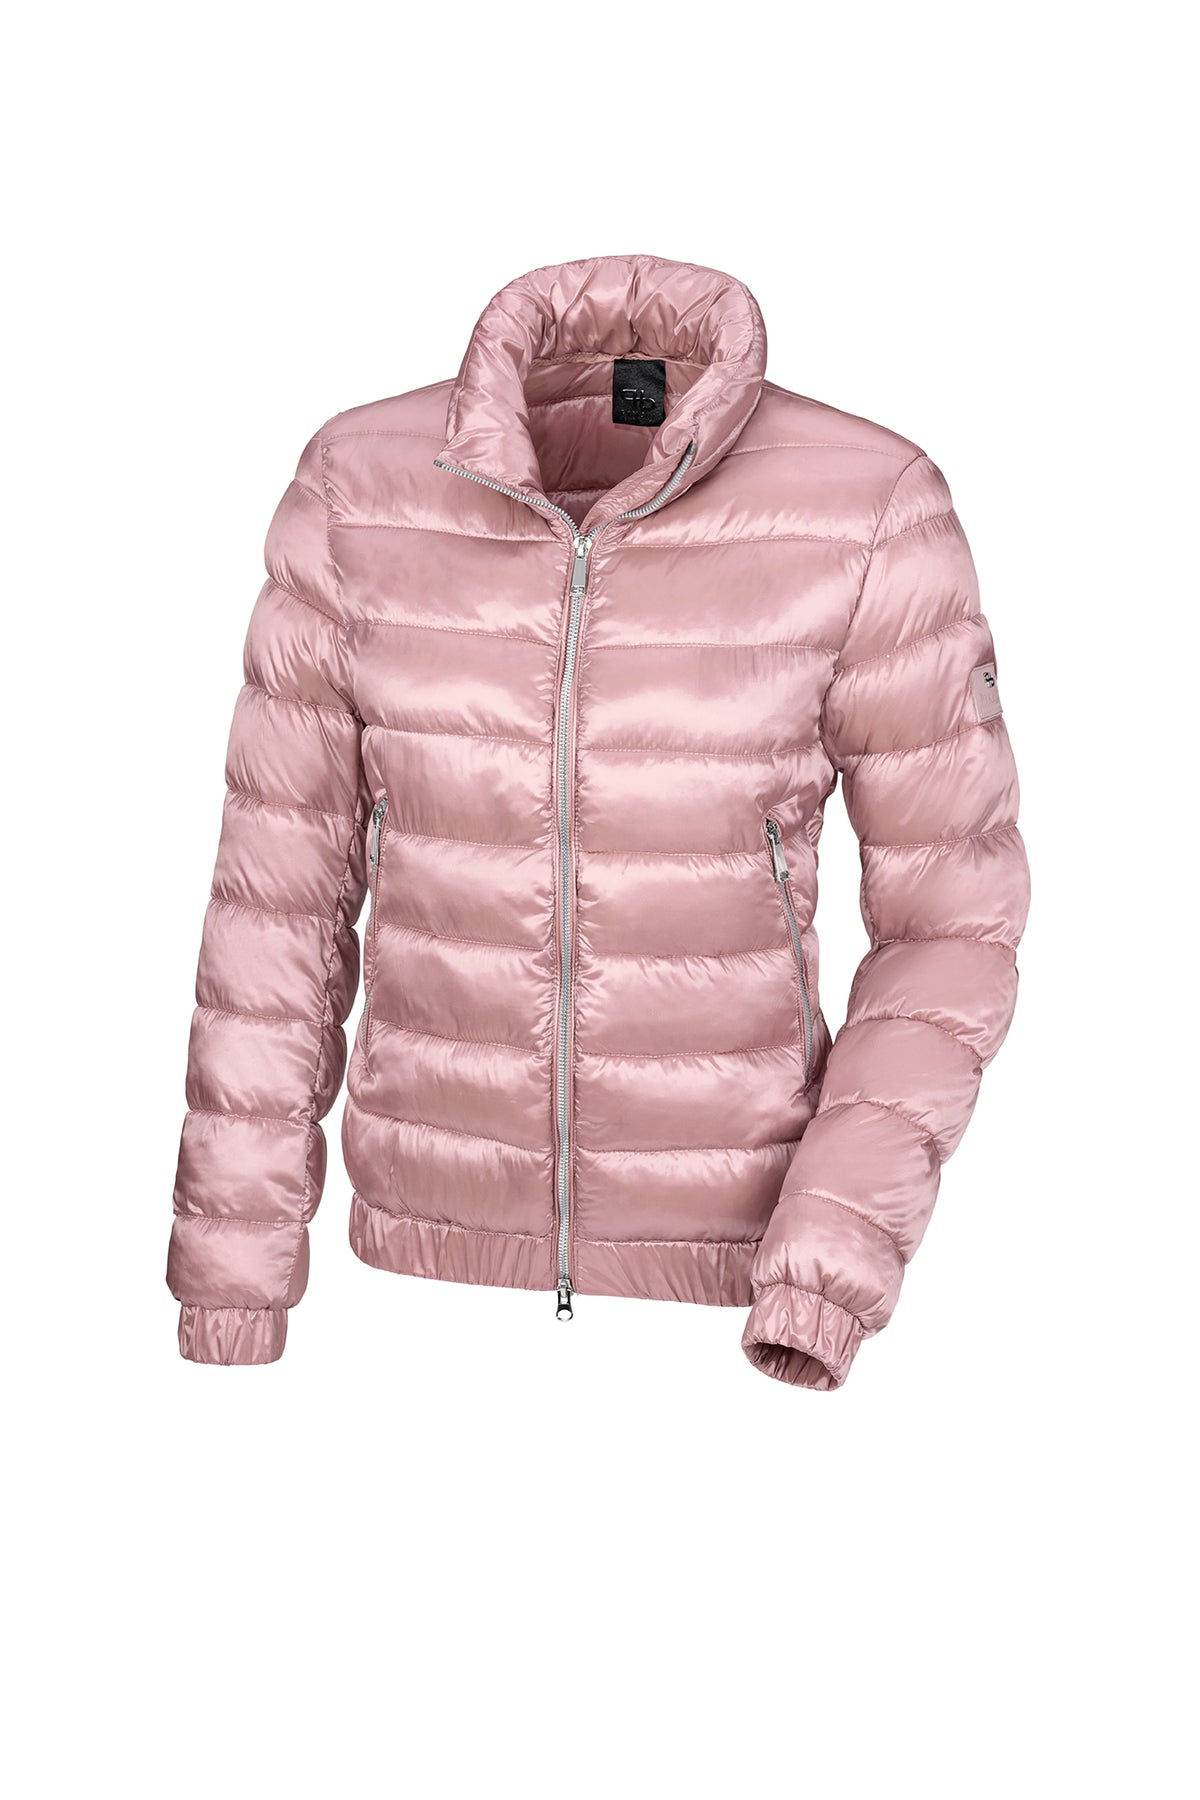 Pikeur Selection Ladies Quilt Jacket